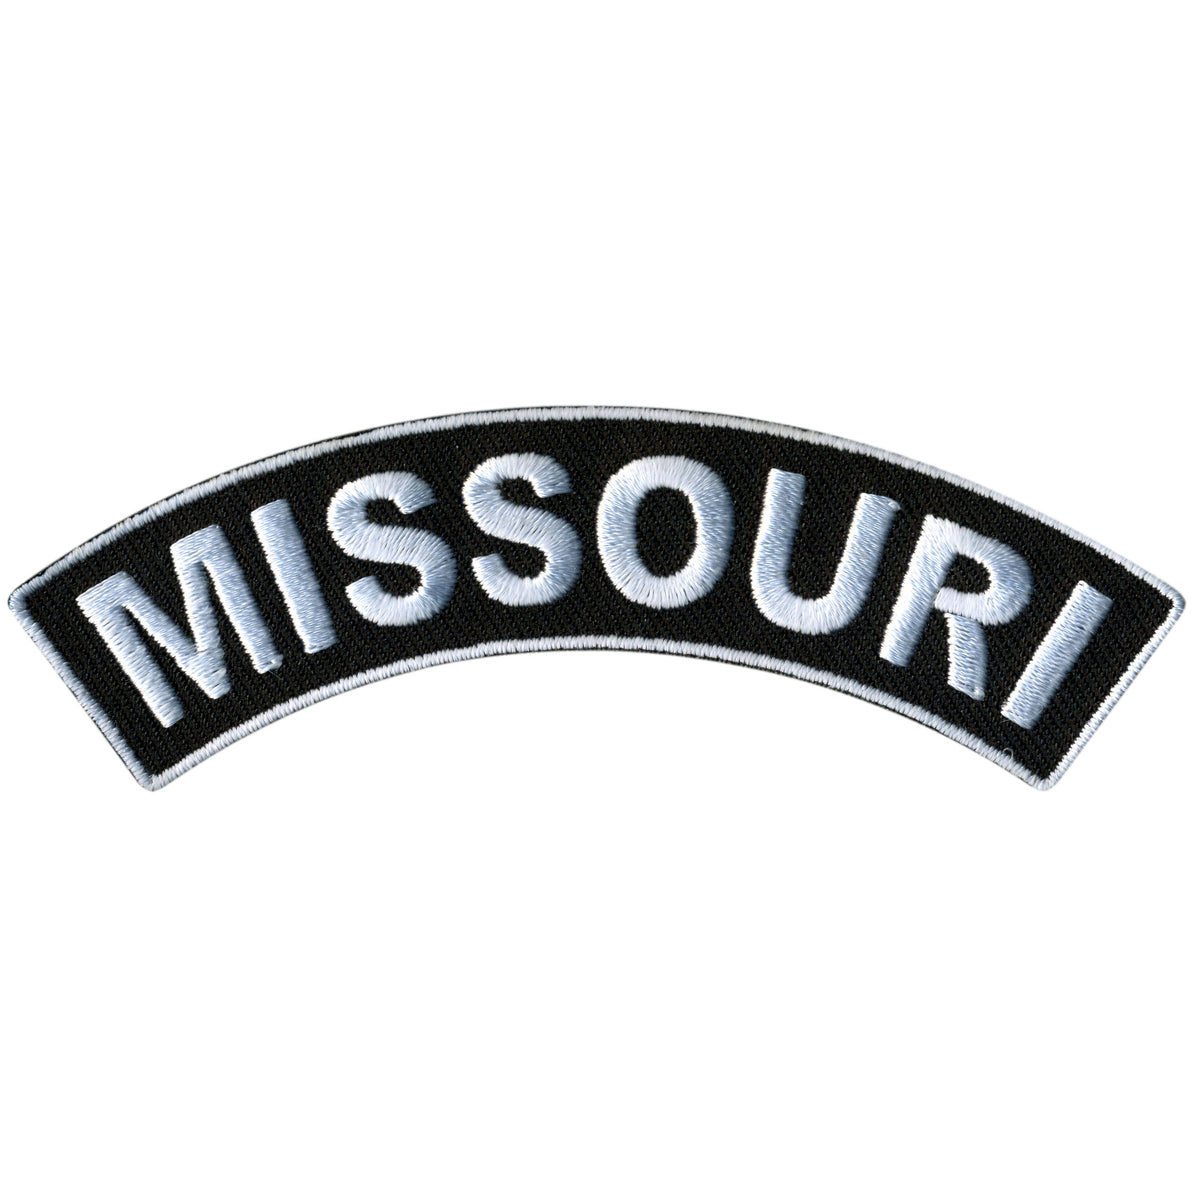 Hot Leathers Missouri 4” X 1” Top Rocker Patch